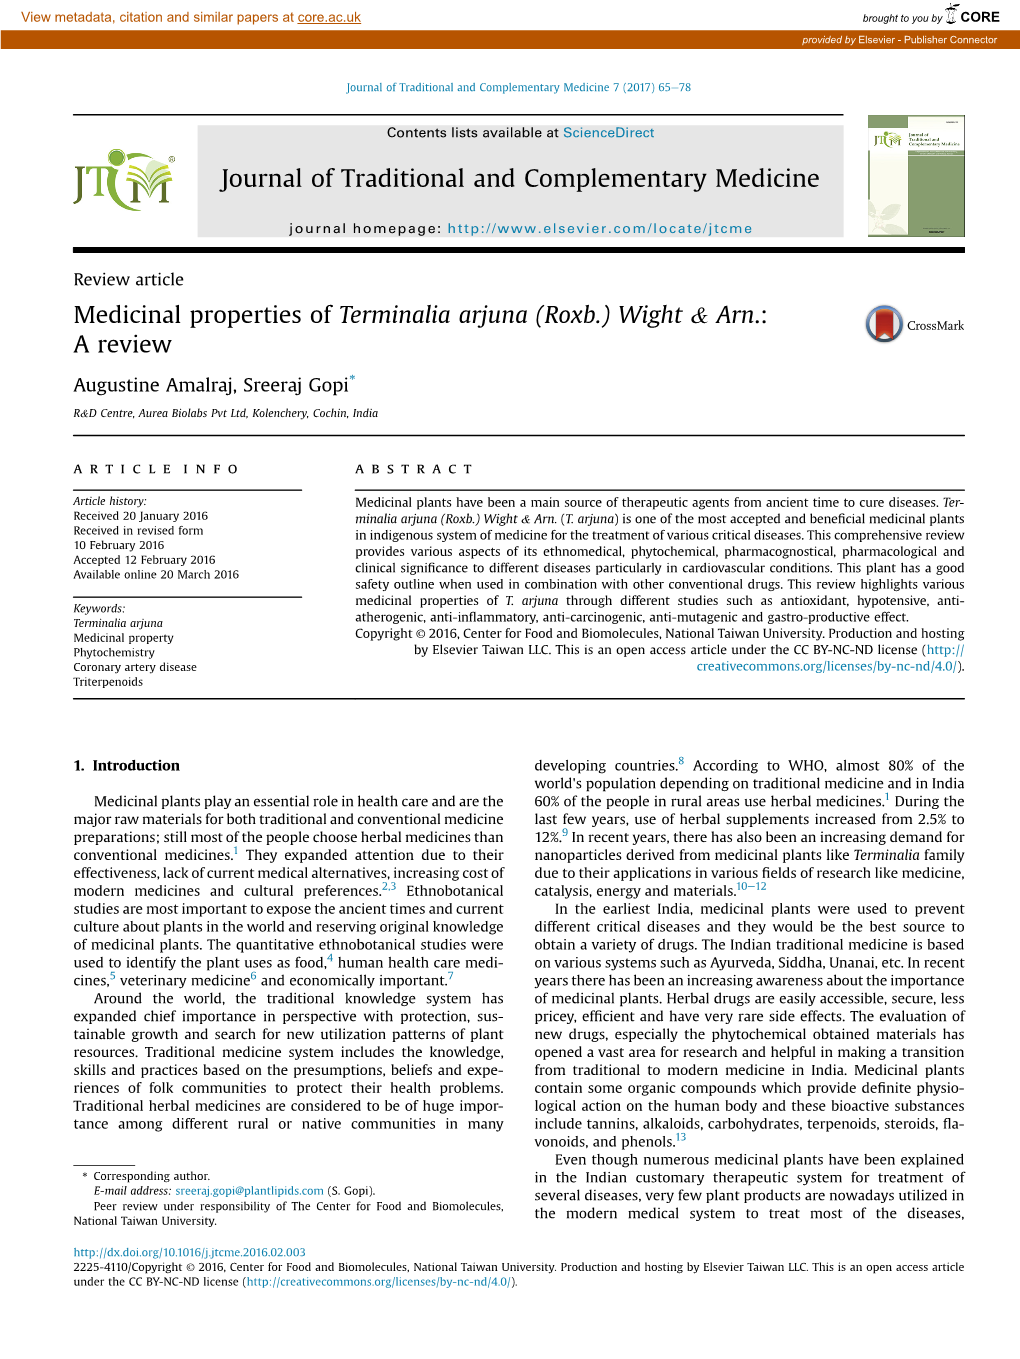 Medicinal Properties of Terminalia Arjuna (Roxb.) Wight & Arn.: a Review